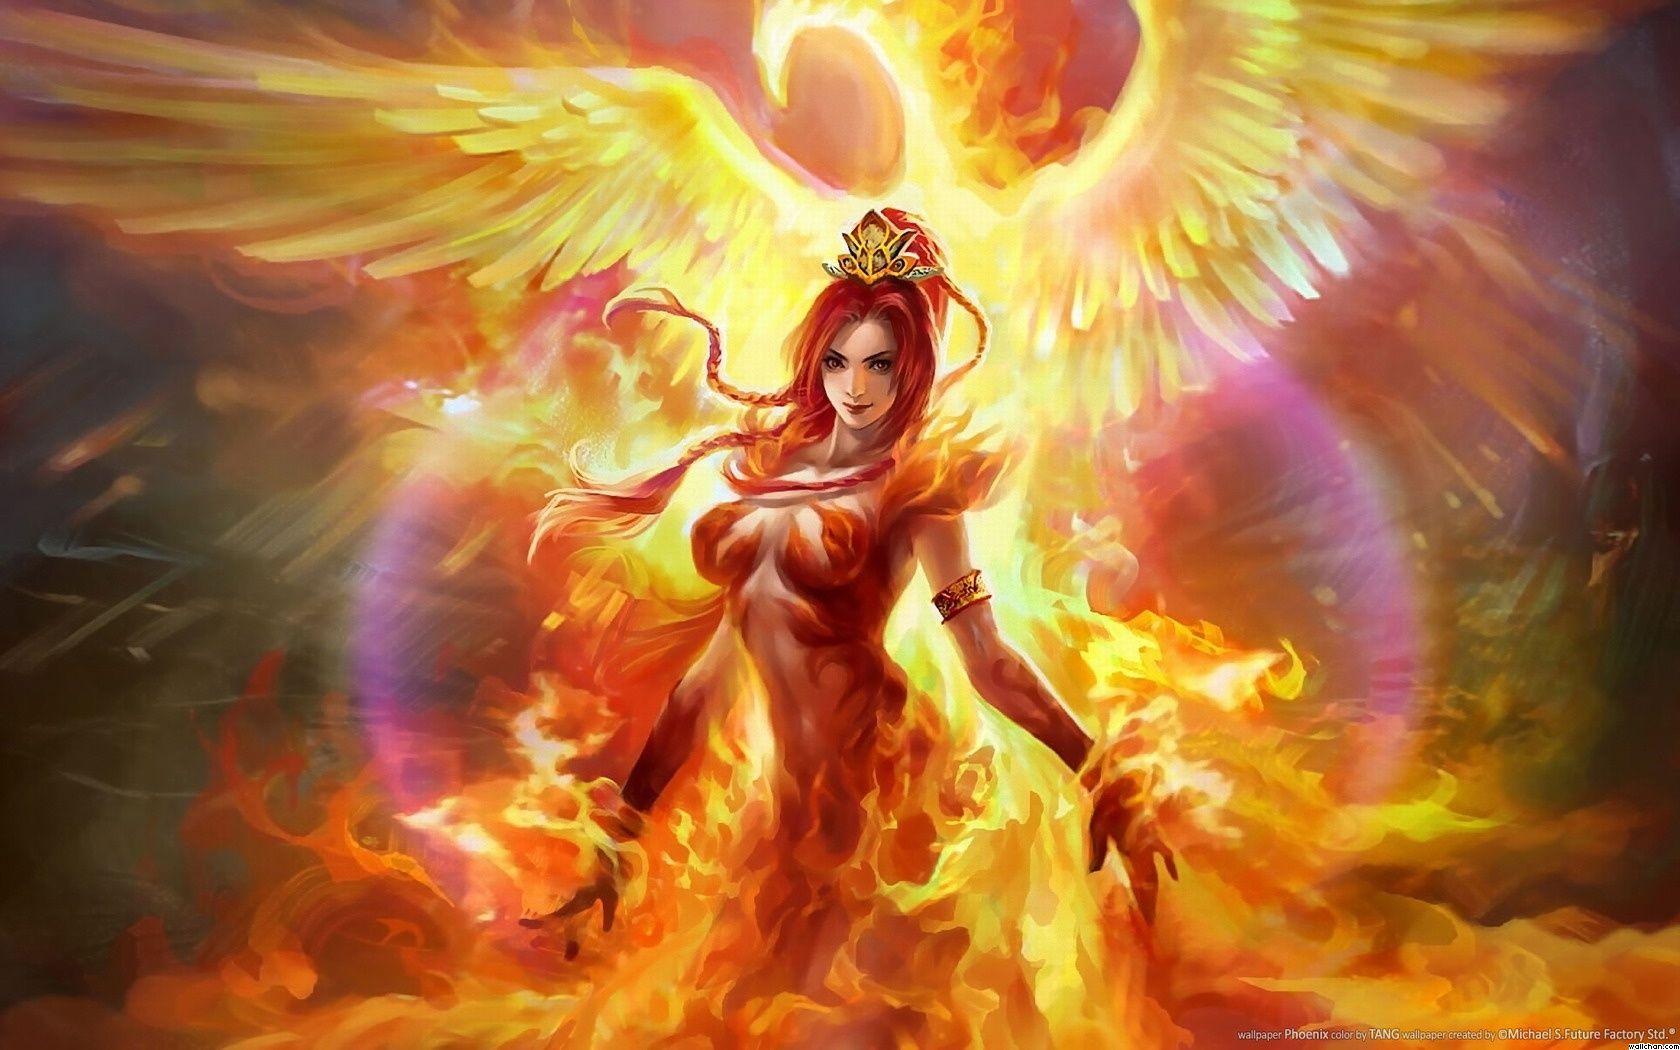 General 1680x1050 fantasy art fantasy girl erotic art  redhead boobs big boobs belly standing fire magic colorful